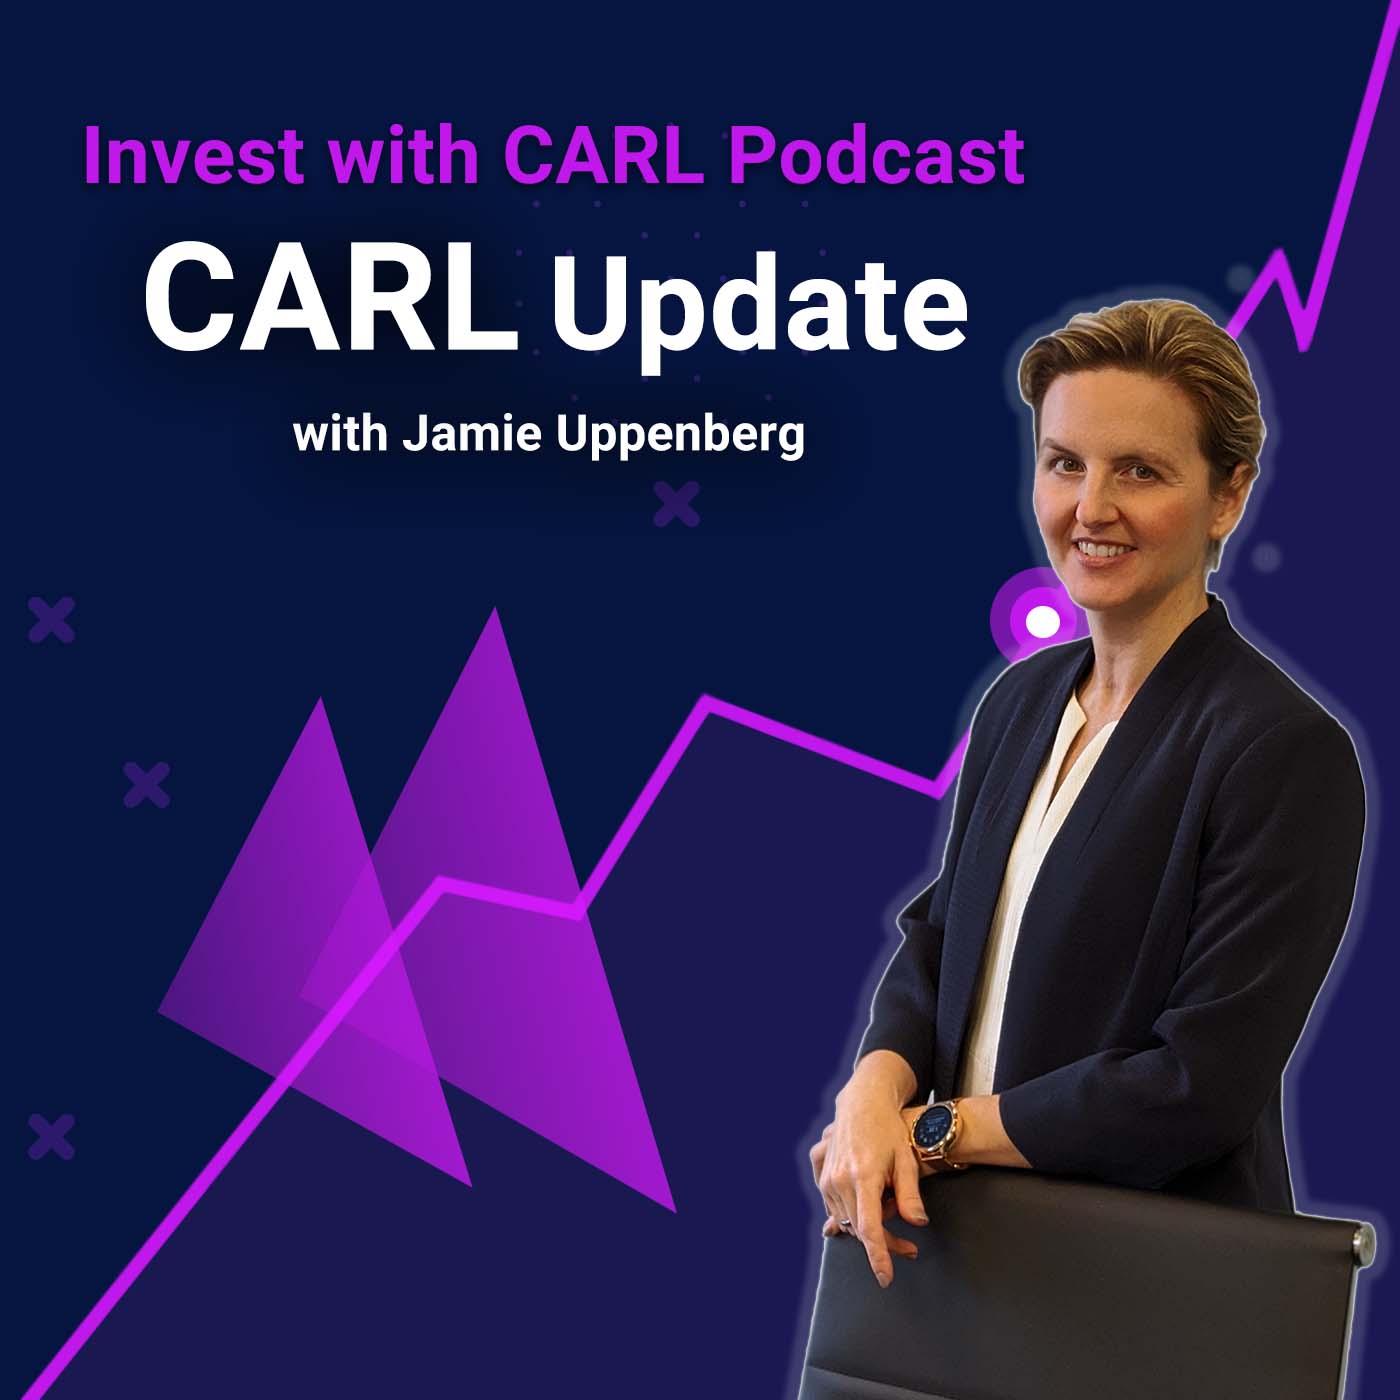 CARL Update with Jamie Uppenberg